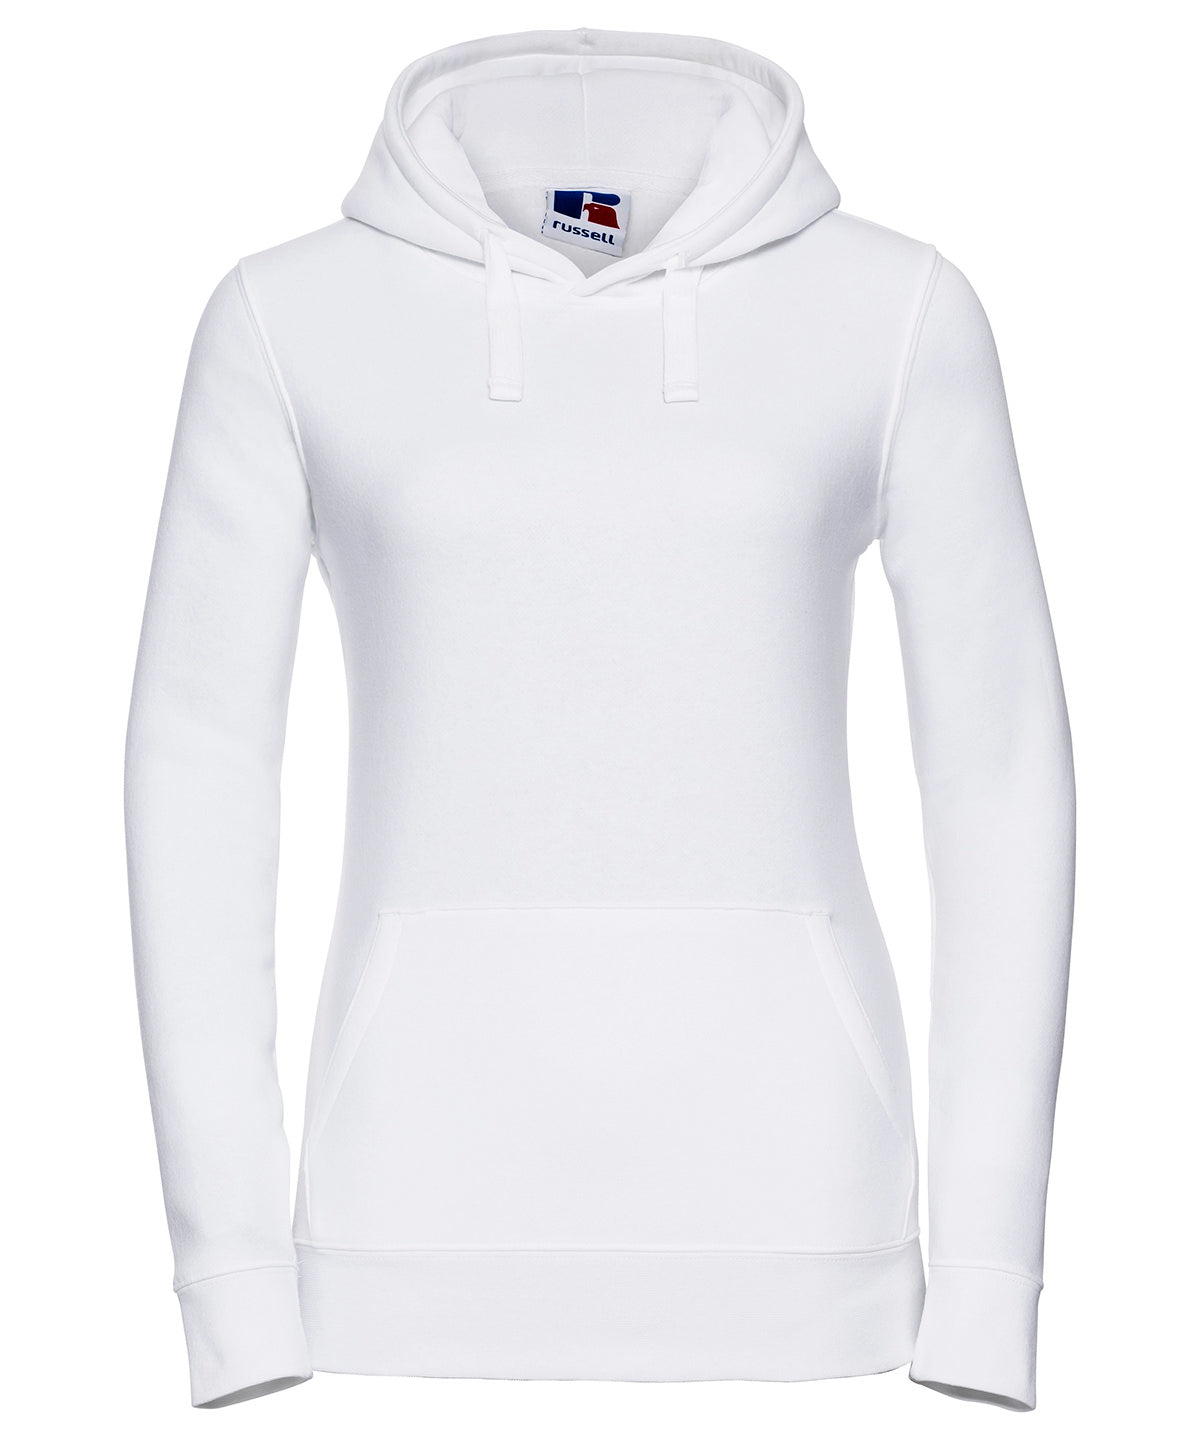 Hettupeysur - Women's Authentic Hooded Sweatshirt